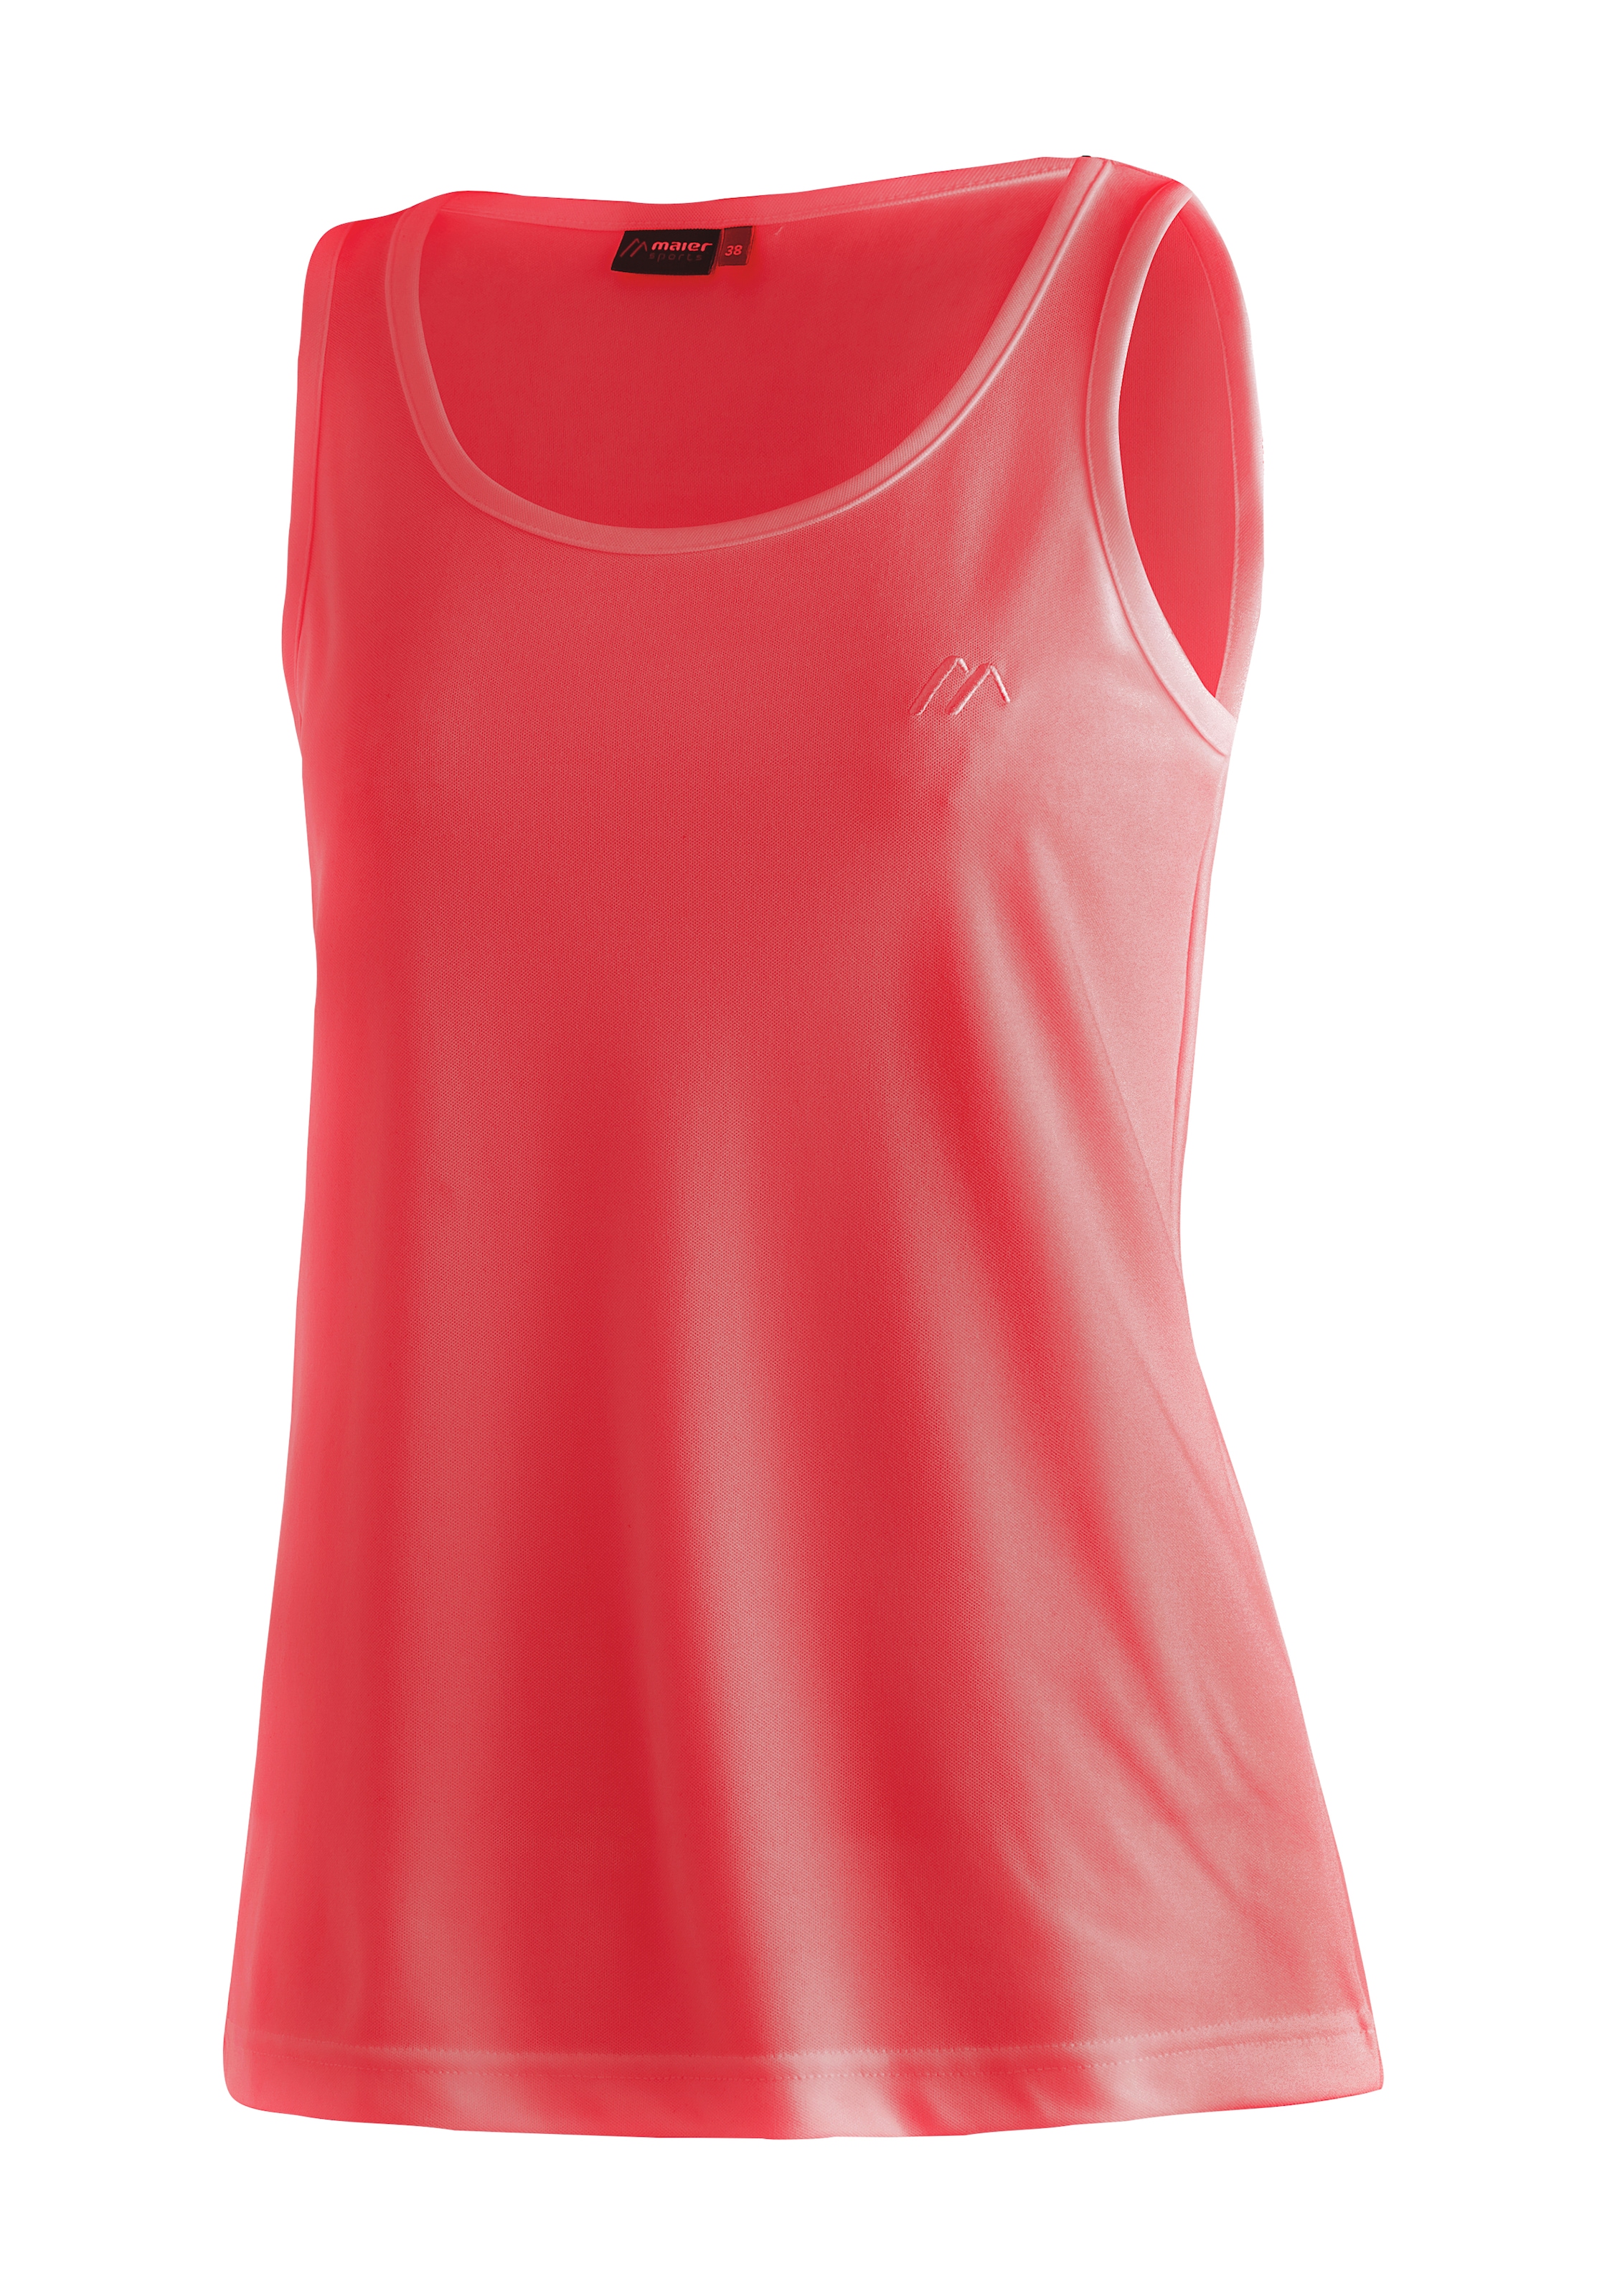 Maier Sports »Petra«, Outdoor-Aktivitäten, Funktionsshirt Tank-Top und Sport für kaufen Damen ärmelloses Shirt